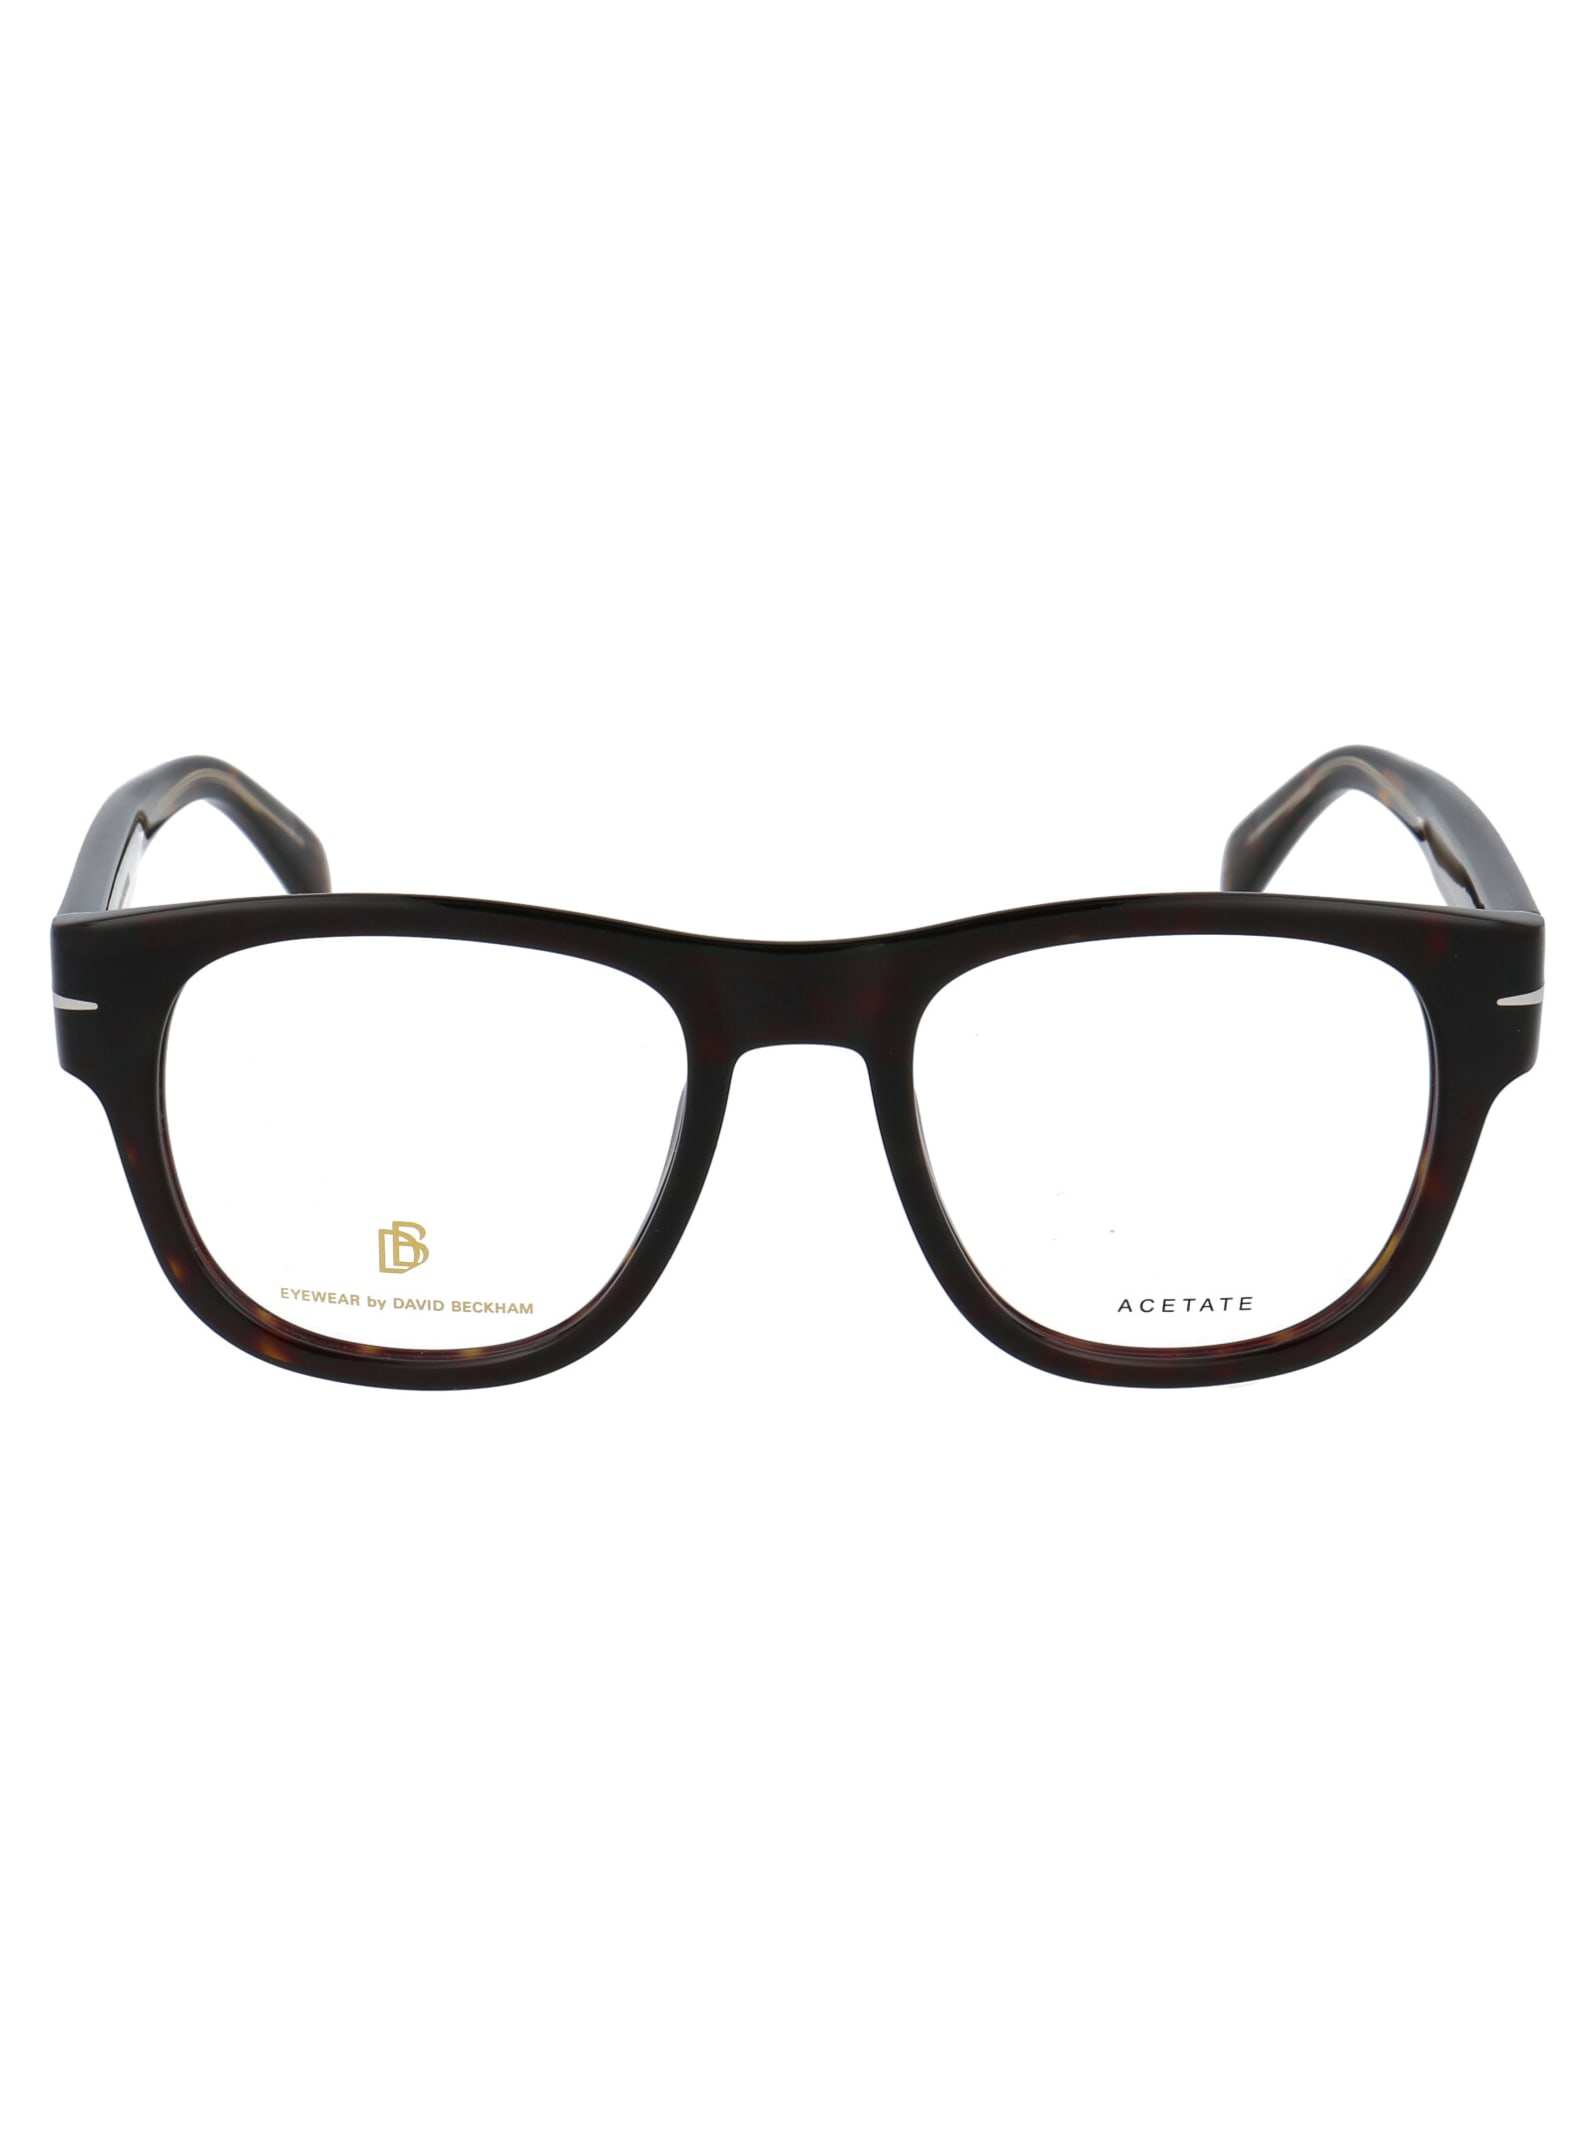 DB Eyewear by David Beckham Db 7025 Glasses